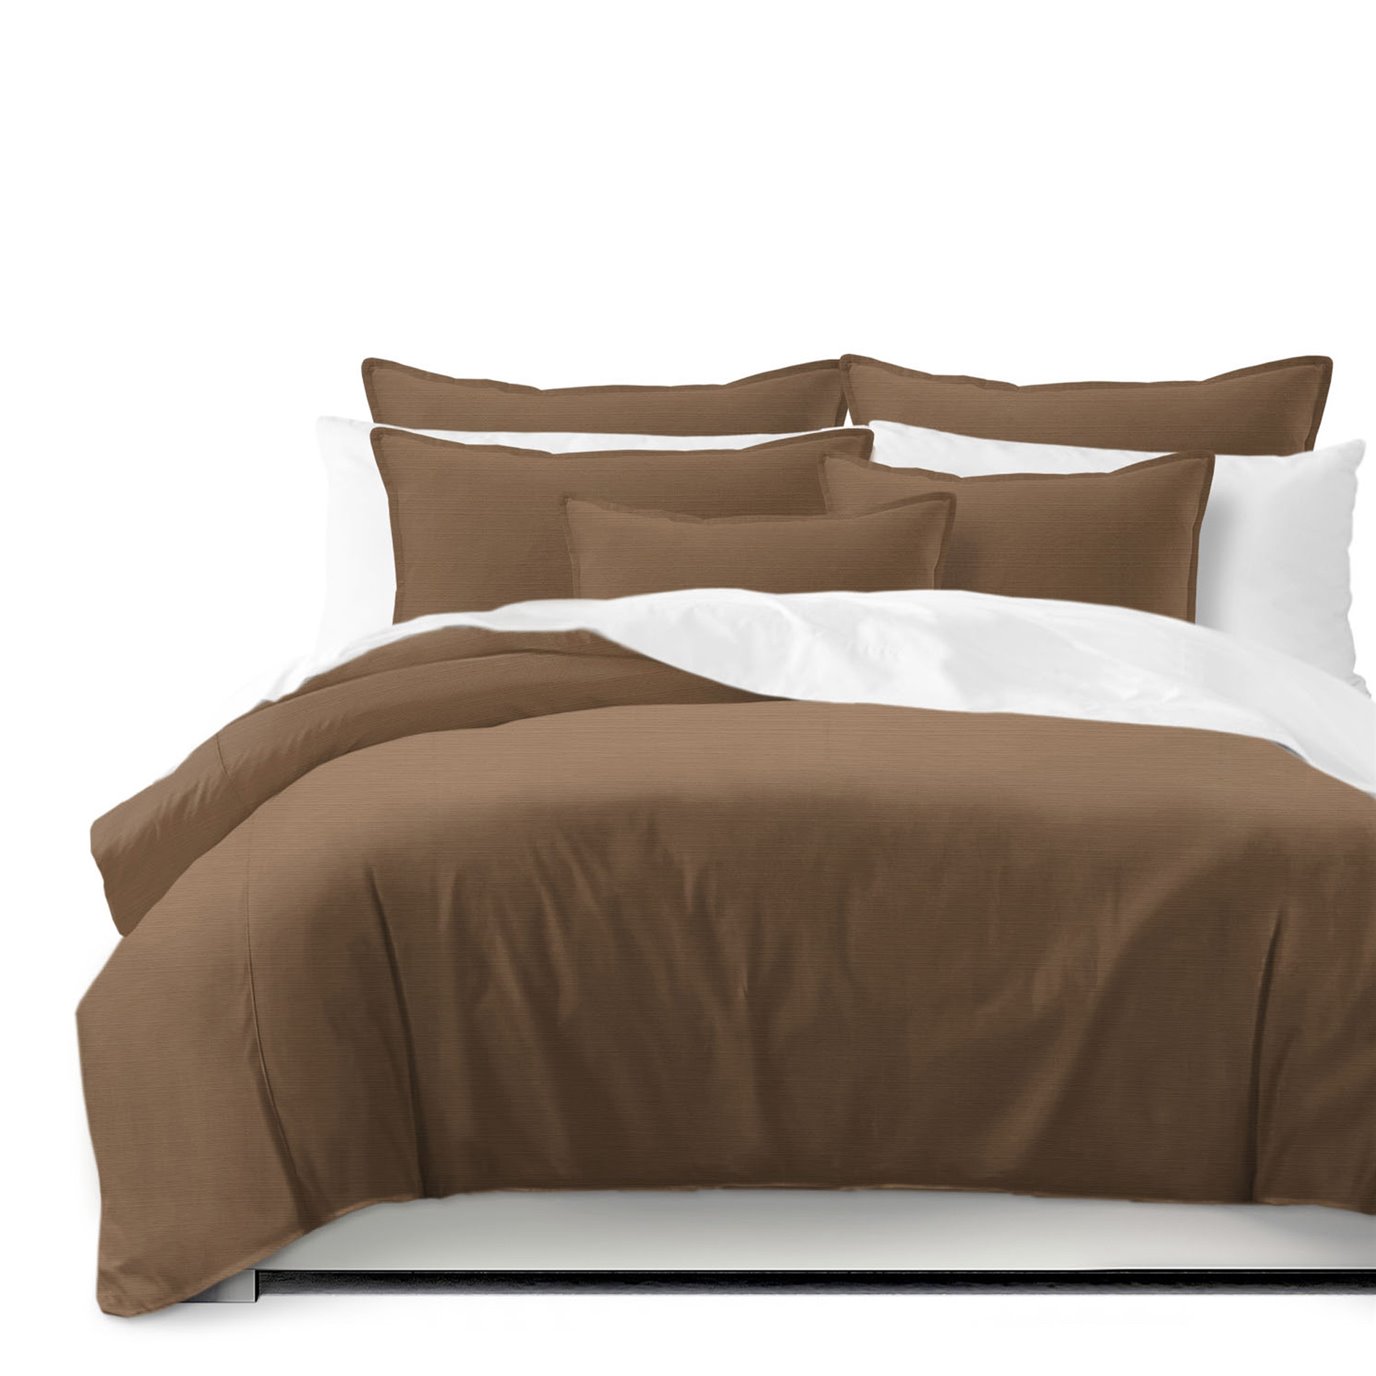 Nova Walnut Coverlet and Pillow Sham(s) Set - Size Twin